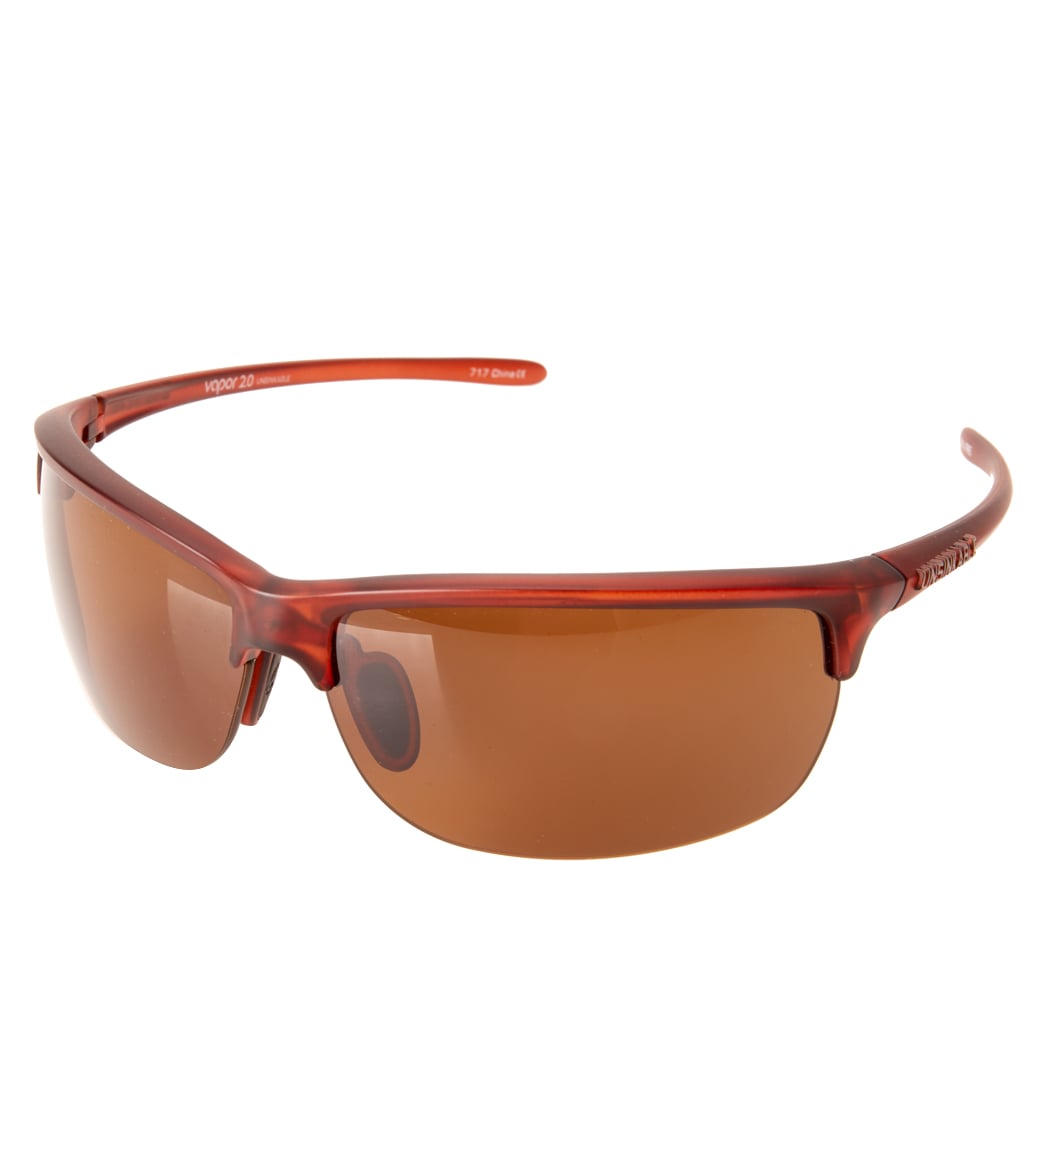 Unsinkable Polarized Vapor 2.0 Floating Sunglasses - Matte Caramel/Brown - Swimoutlet.com